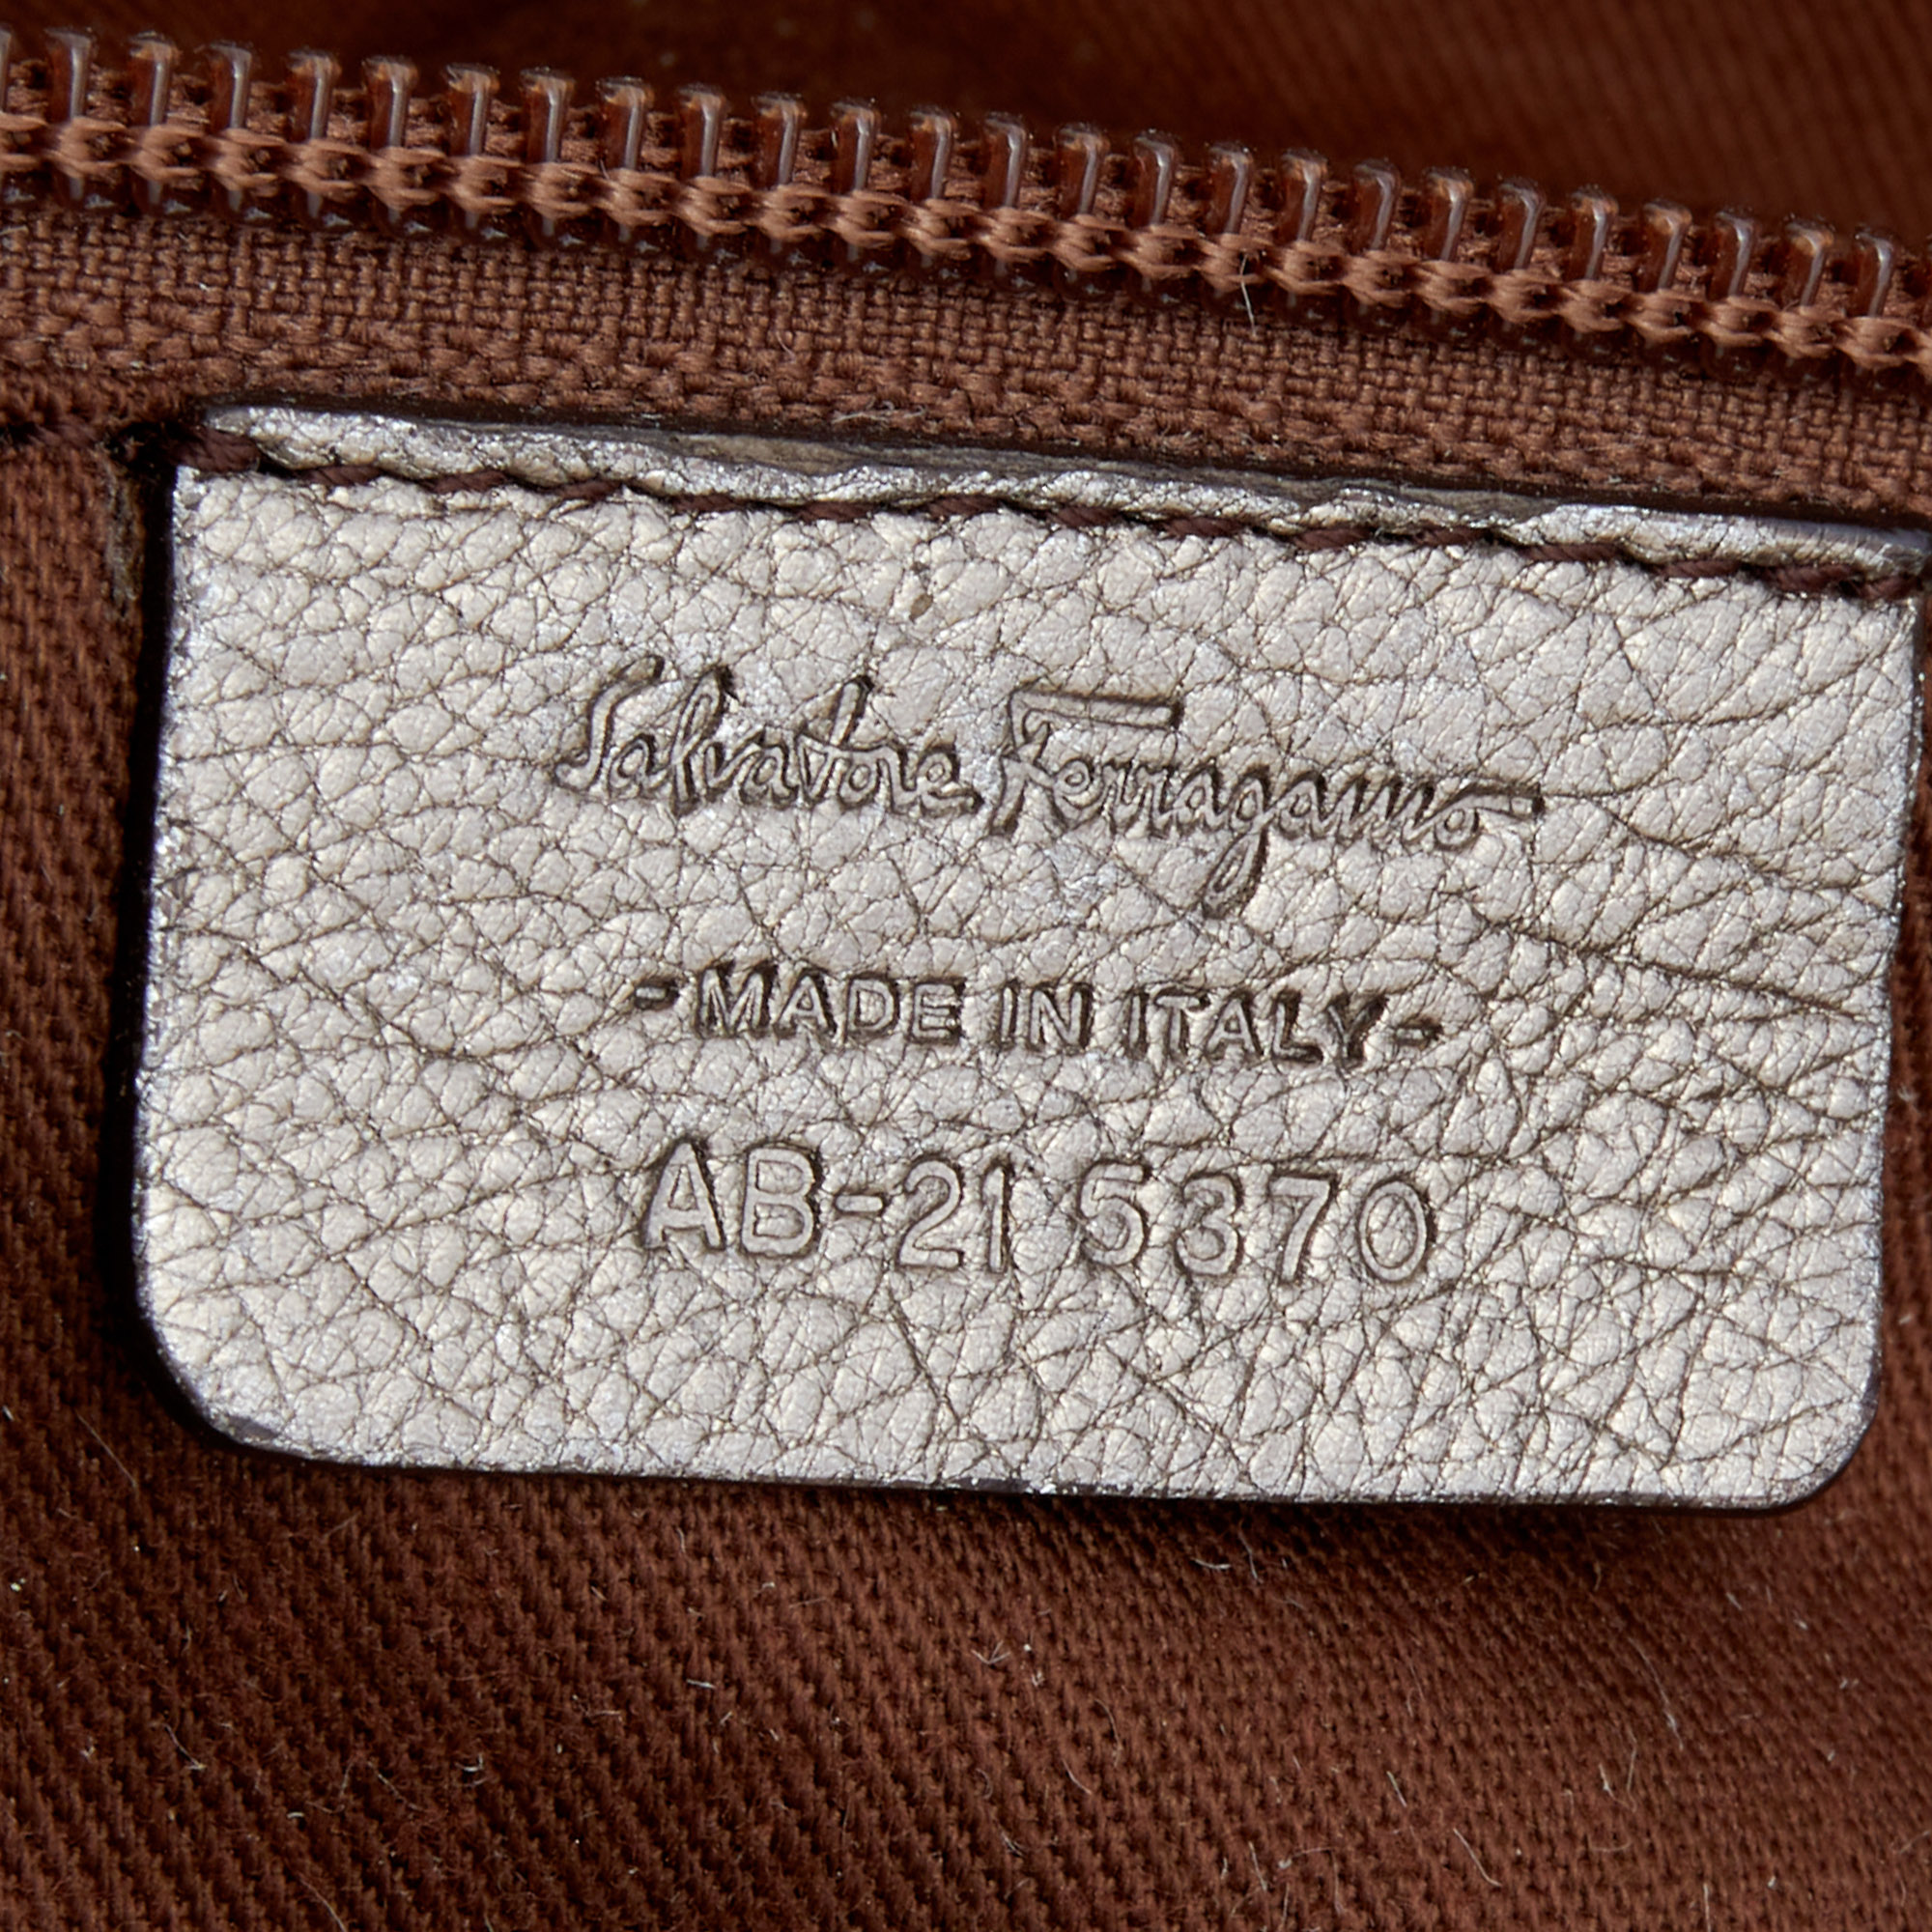 Salvatore Ferragamo Metallic Gold Leather Marisa Shoulder Bag